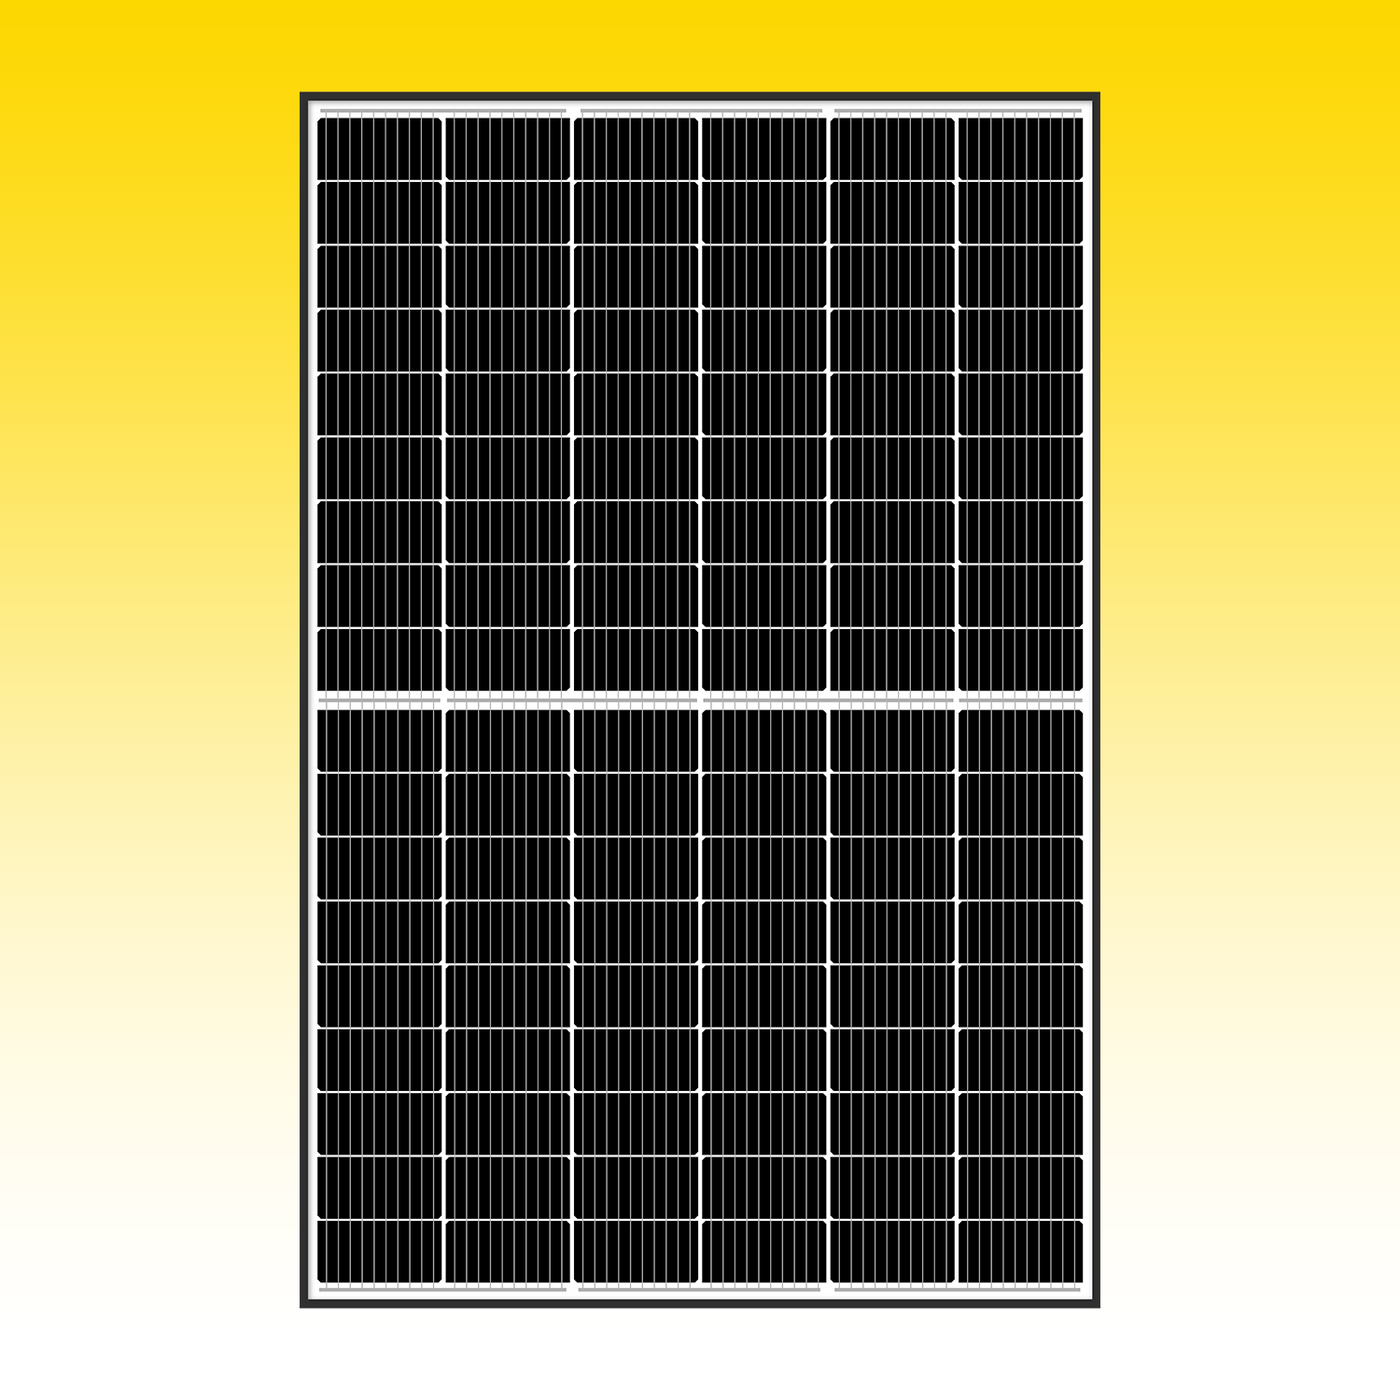 Solarmodul 410W Monokristallin Glas/Folie  - Sunova  SS-410-54MDH